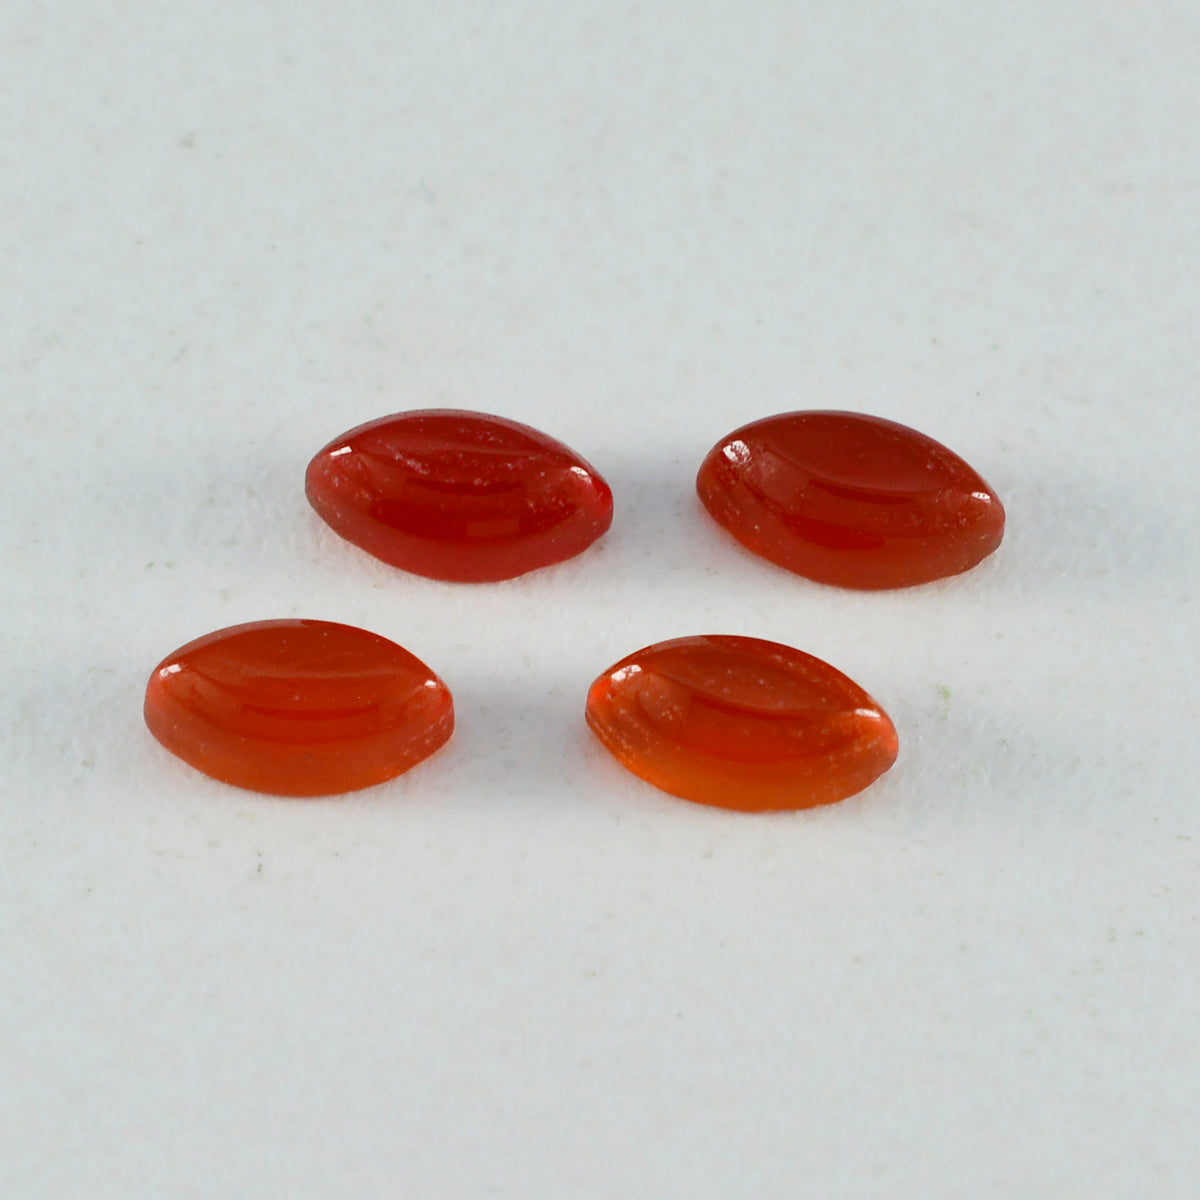 Riyogems 1PC Red Onyx Cabochon 8x16 mm Marquise Shape superb Quality Loose Gemstone